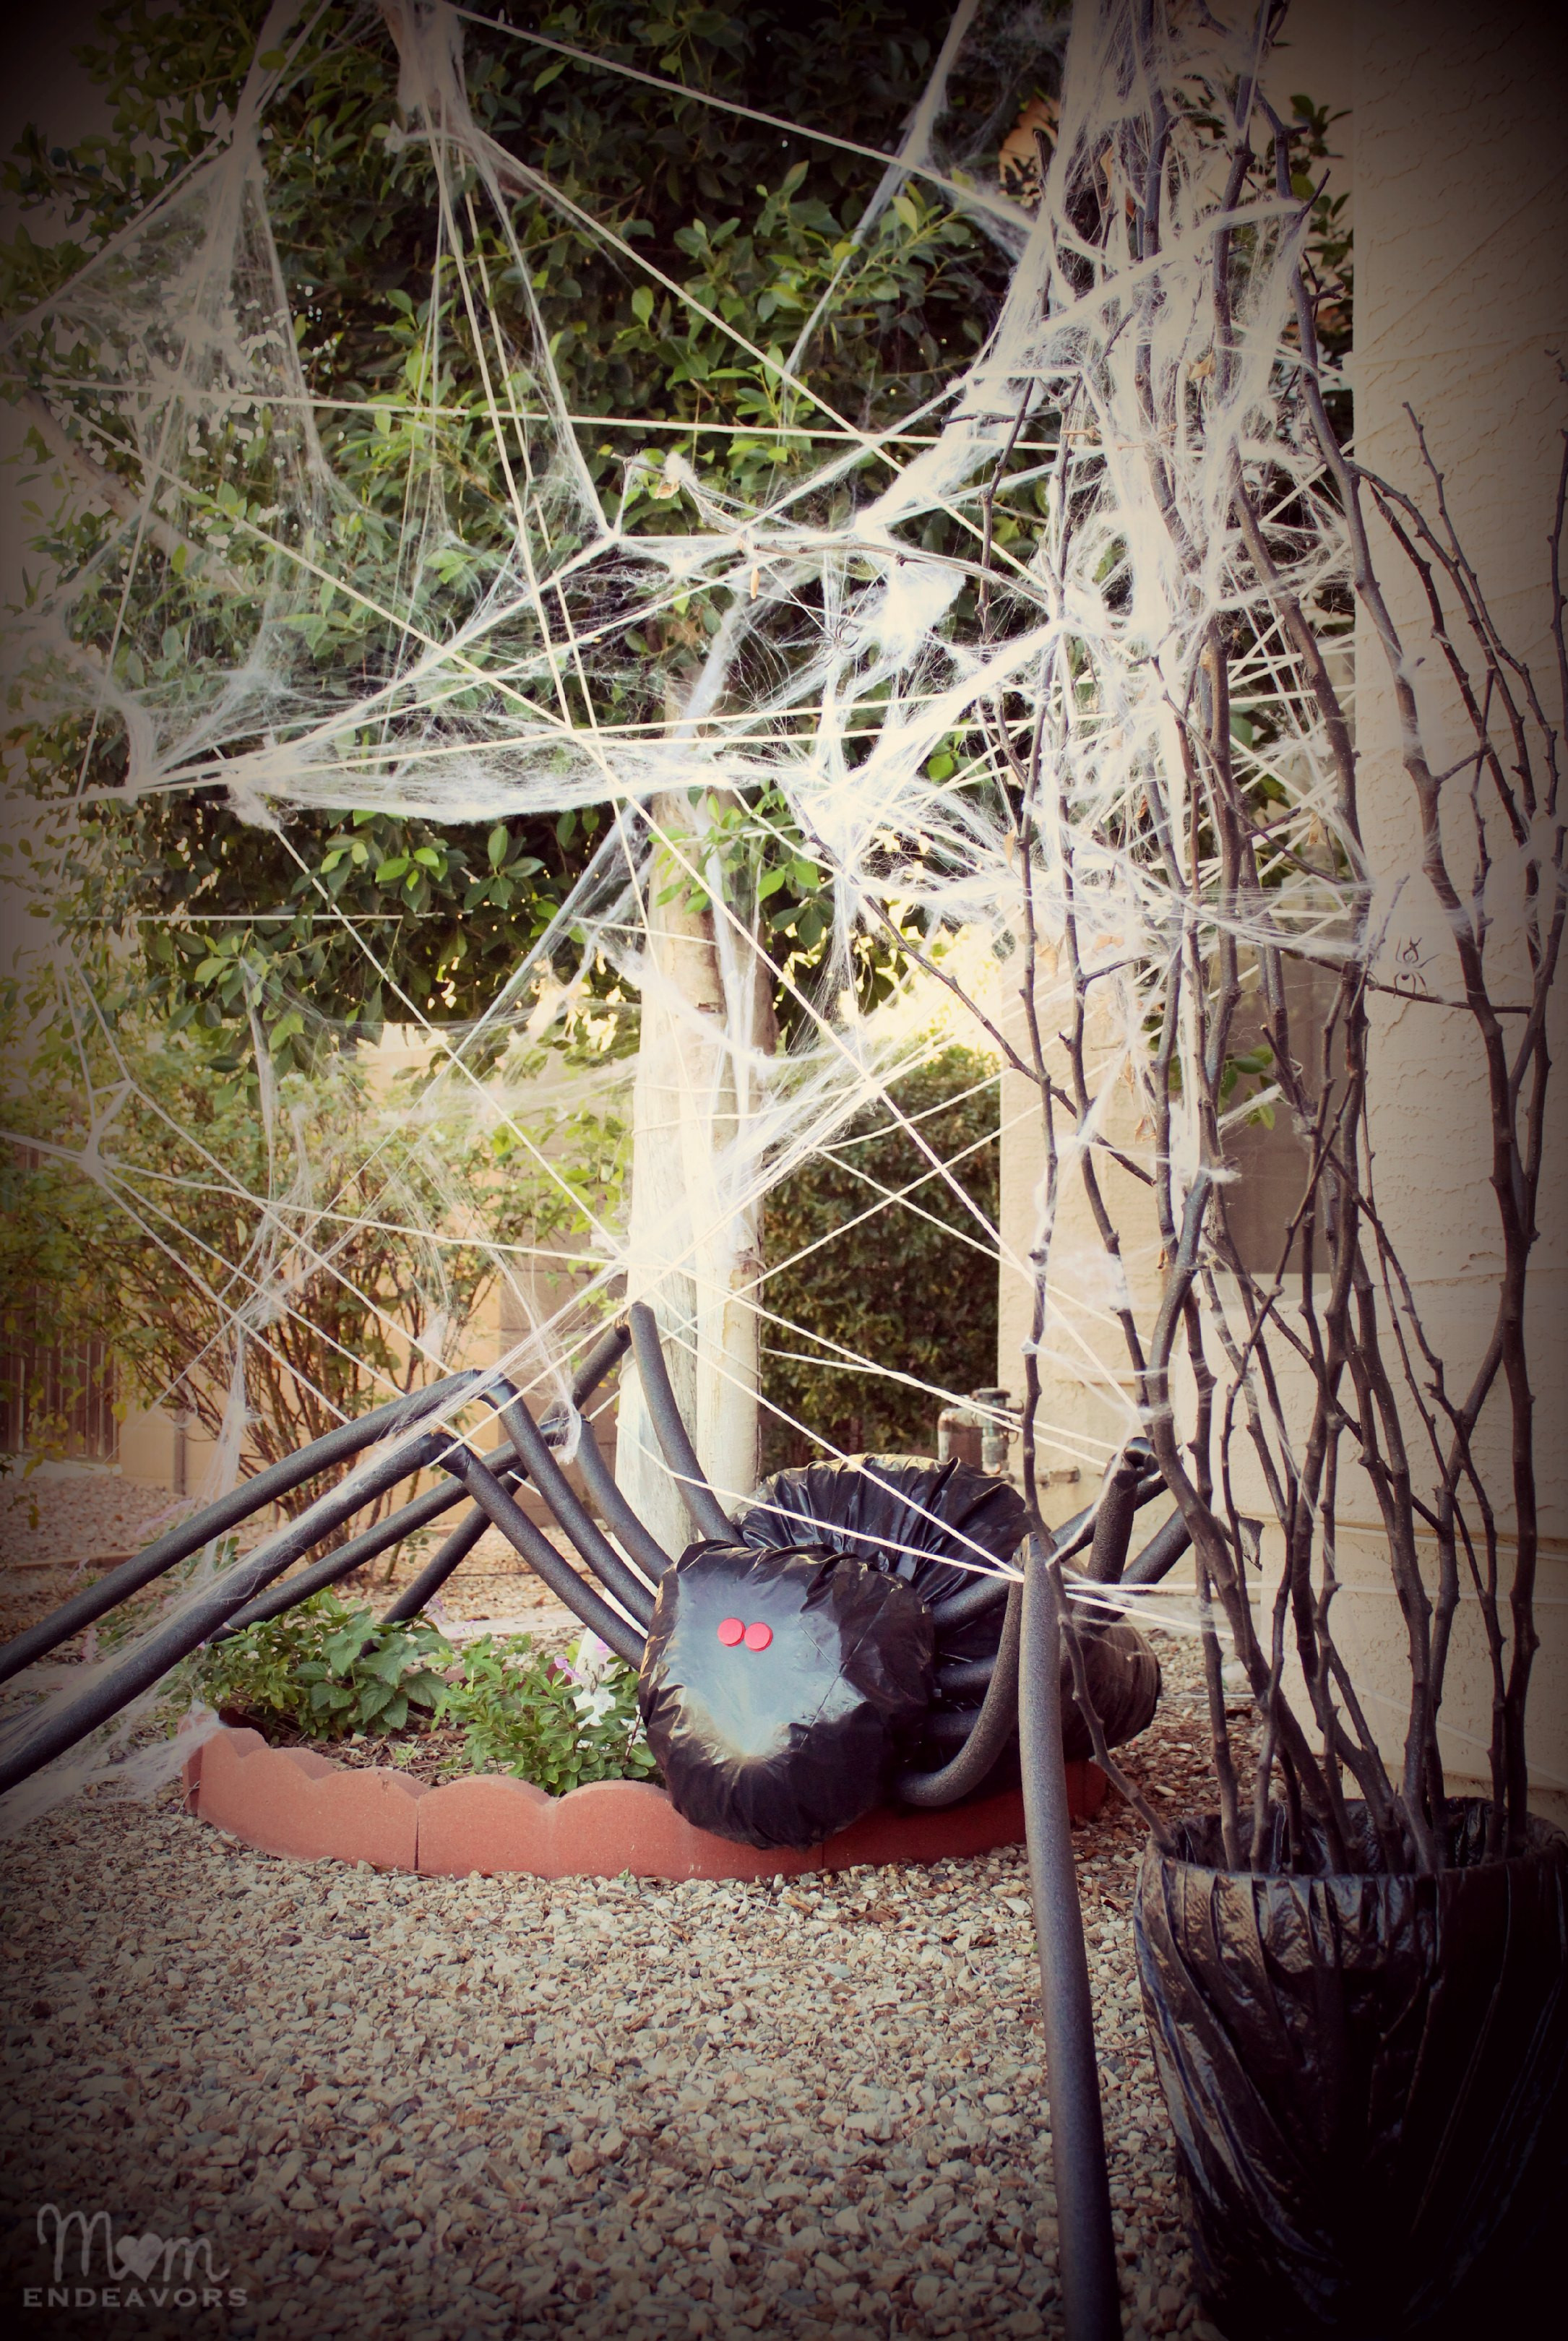 DIY Halloween Outdoor Decorations
 DIY Halloween Yard Decor Giant Spider in Spiderweb